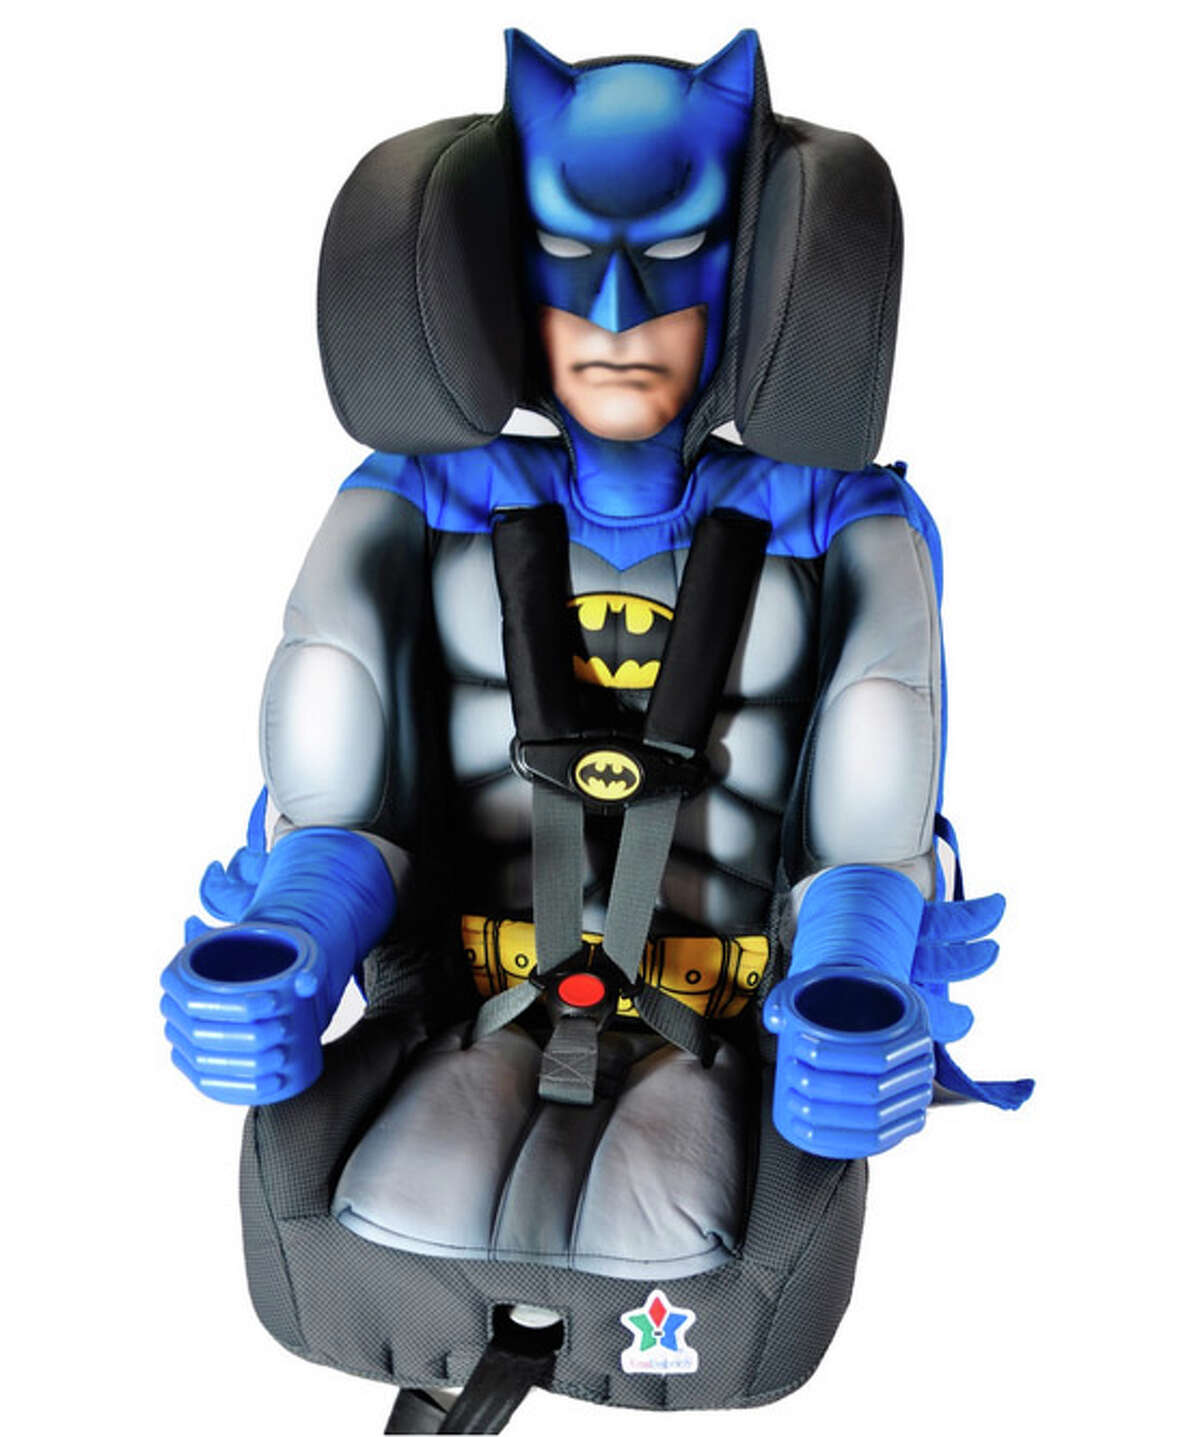 Character-themed car seats